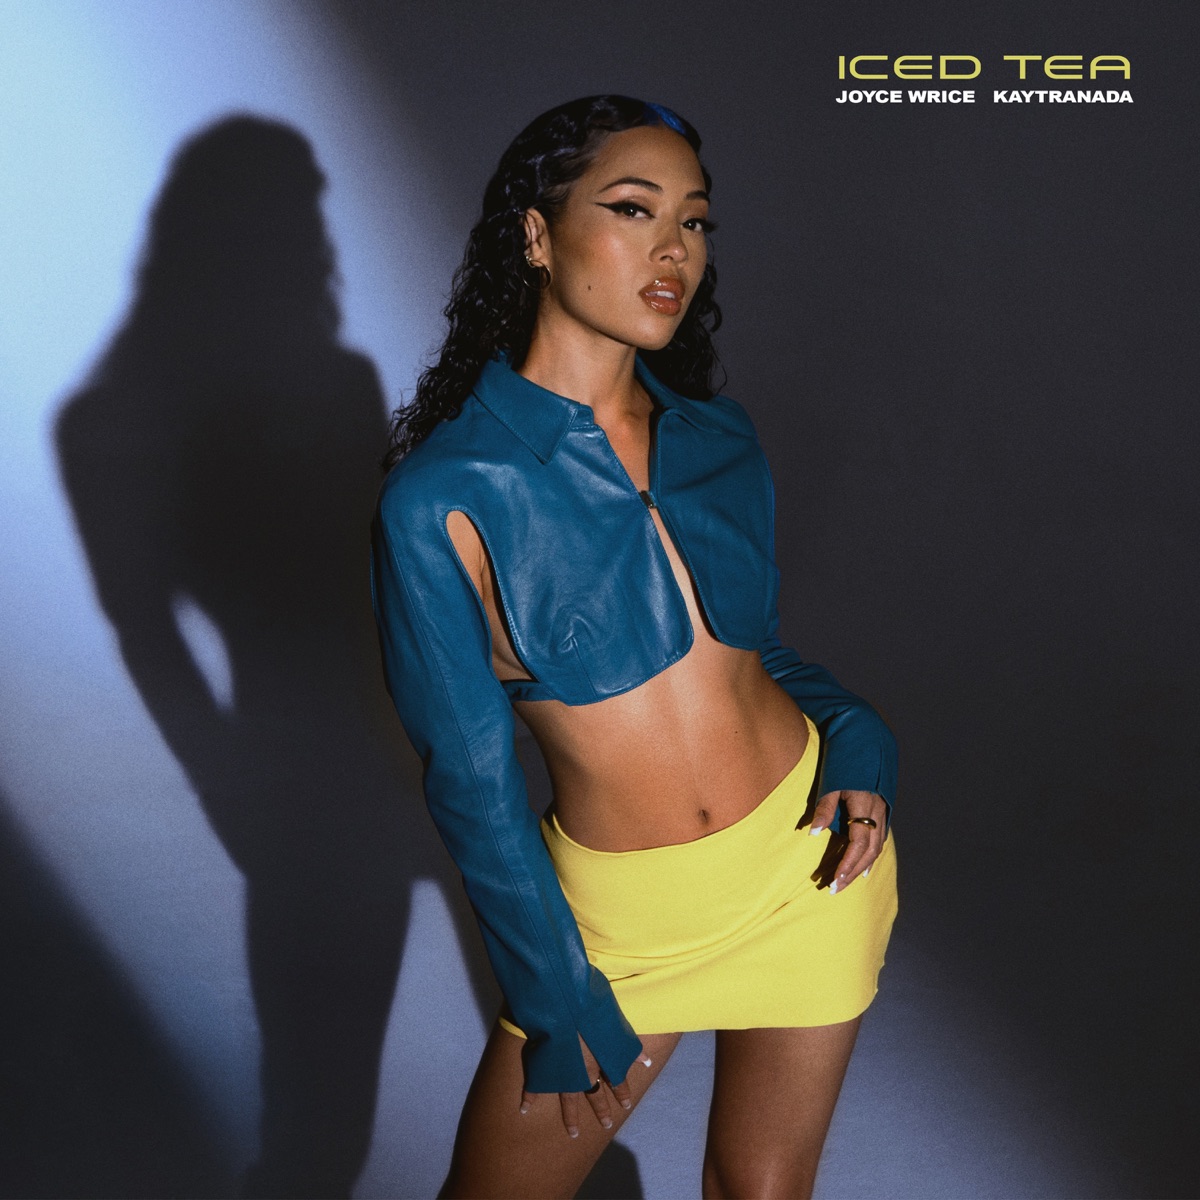 Iced Tea - Single - Album by Joyce Wrice & KAYTRANADA - Apple Music